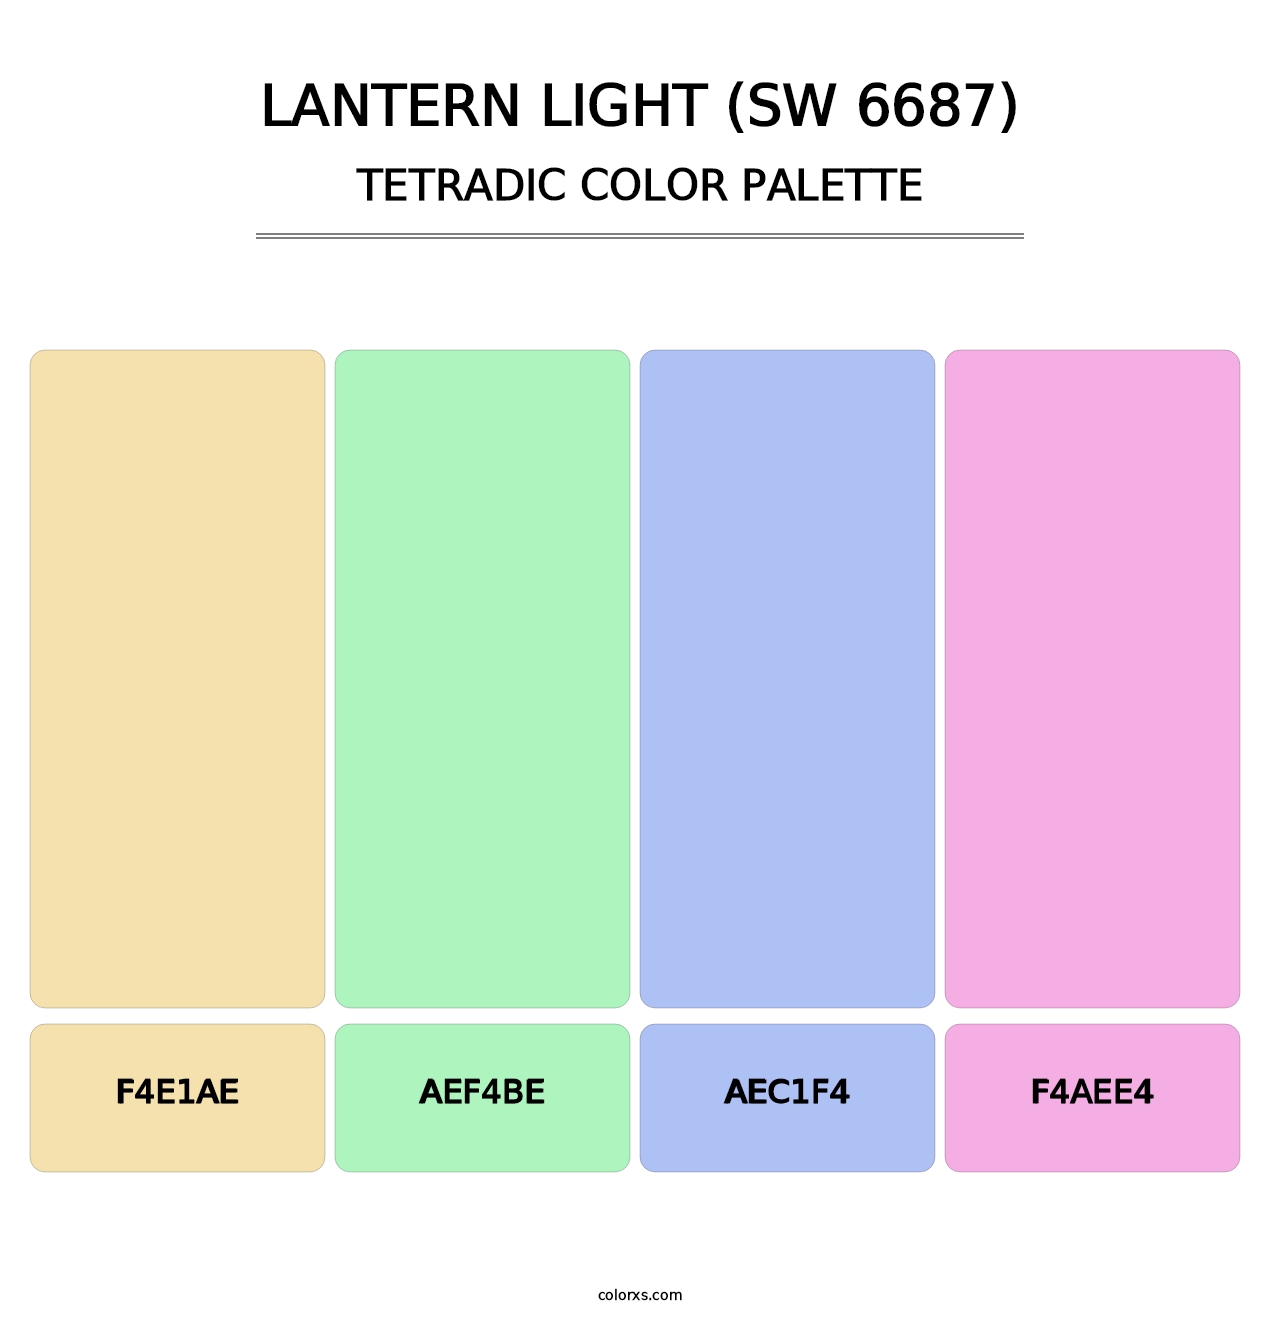 Lantern Light (SW 6687) - Tetradic Color Palette